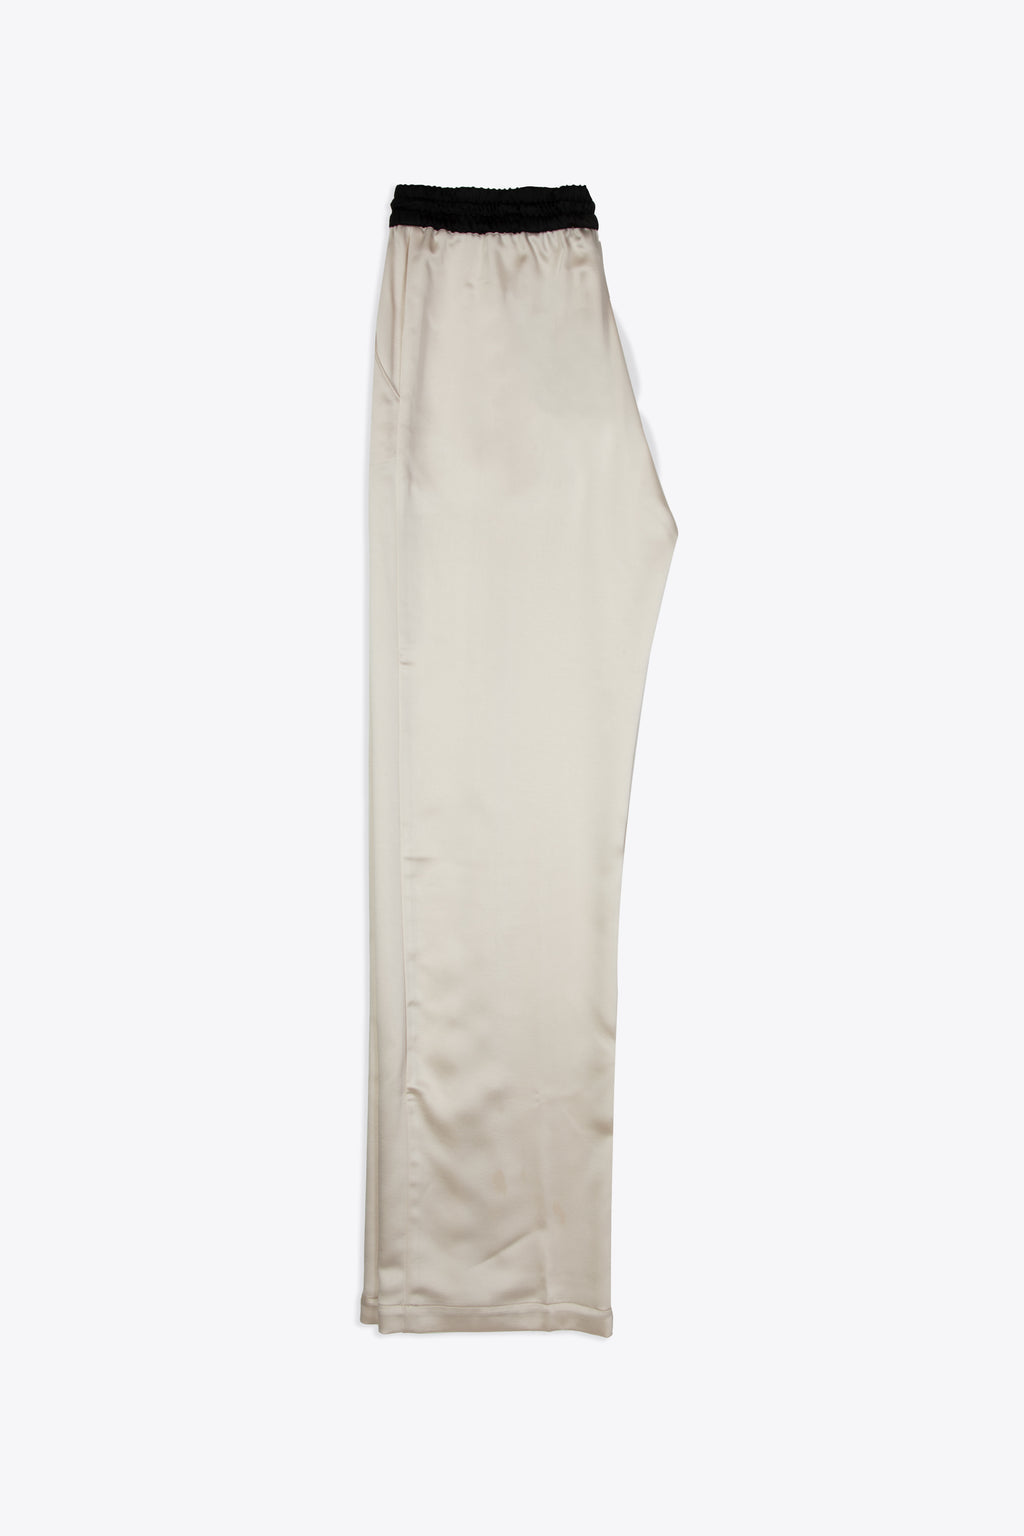 alt-image__Champagne-coloured-satin-pajama-pant-with-elastic-waistband